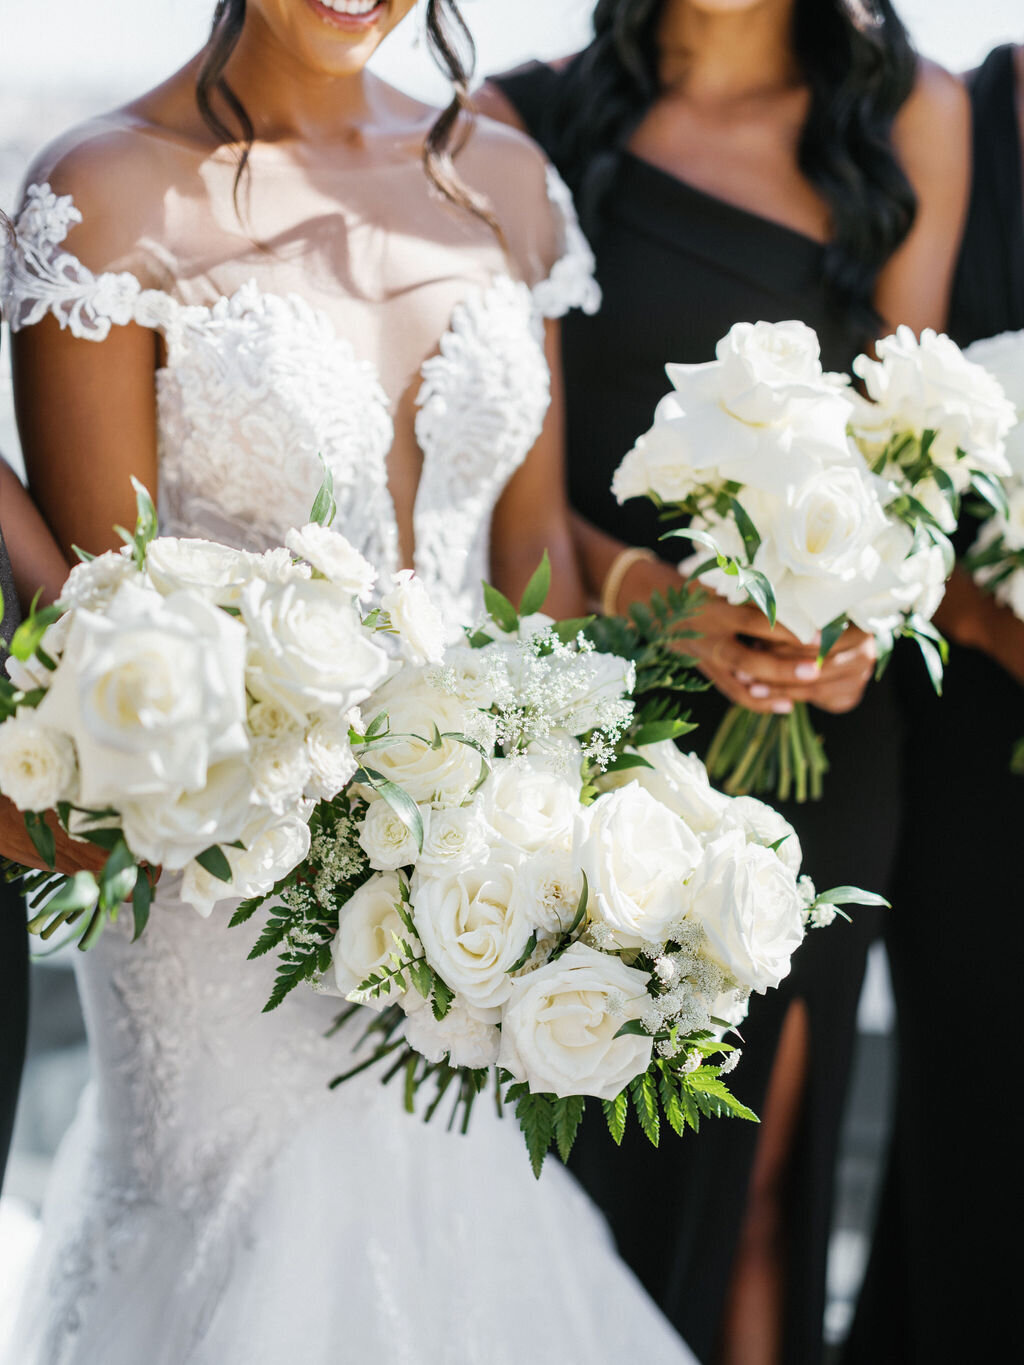 Jayne Heir Weddings and Events - Washington DC Metropolitan Area Wedding and Event Planner - Modern, Stylish, Custom, Top, Best Photo - 16